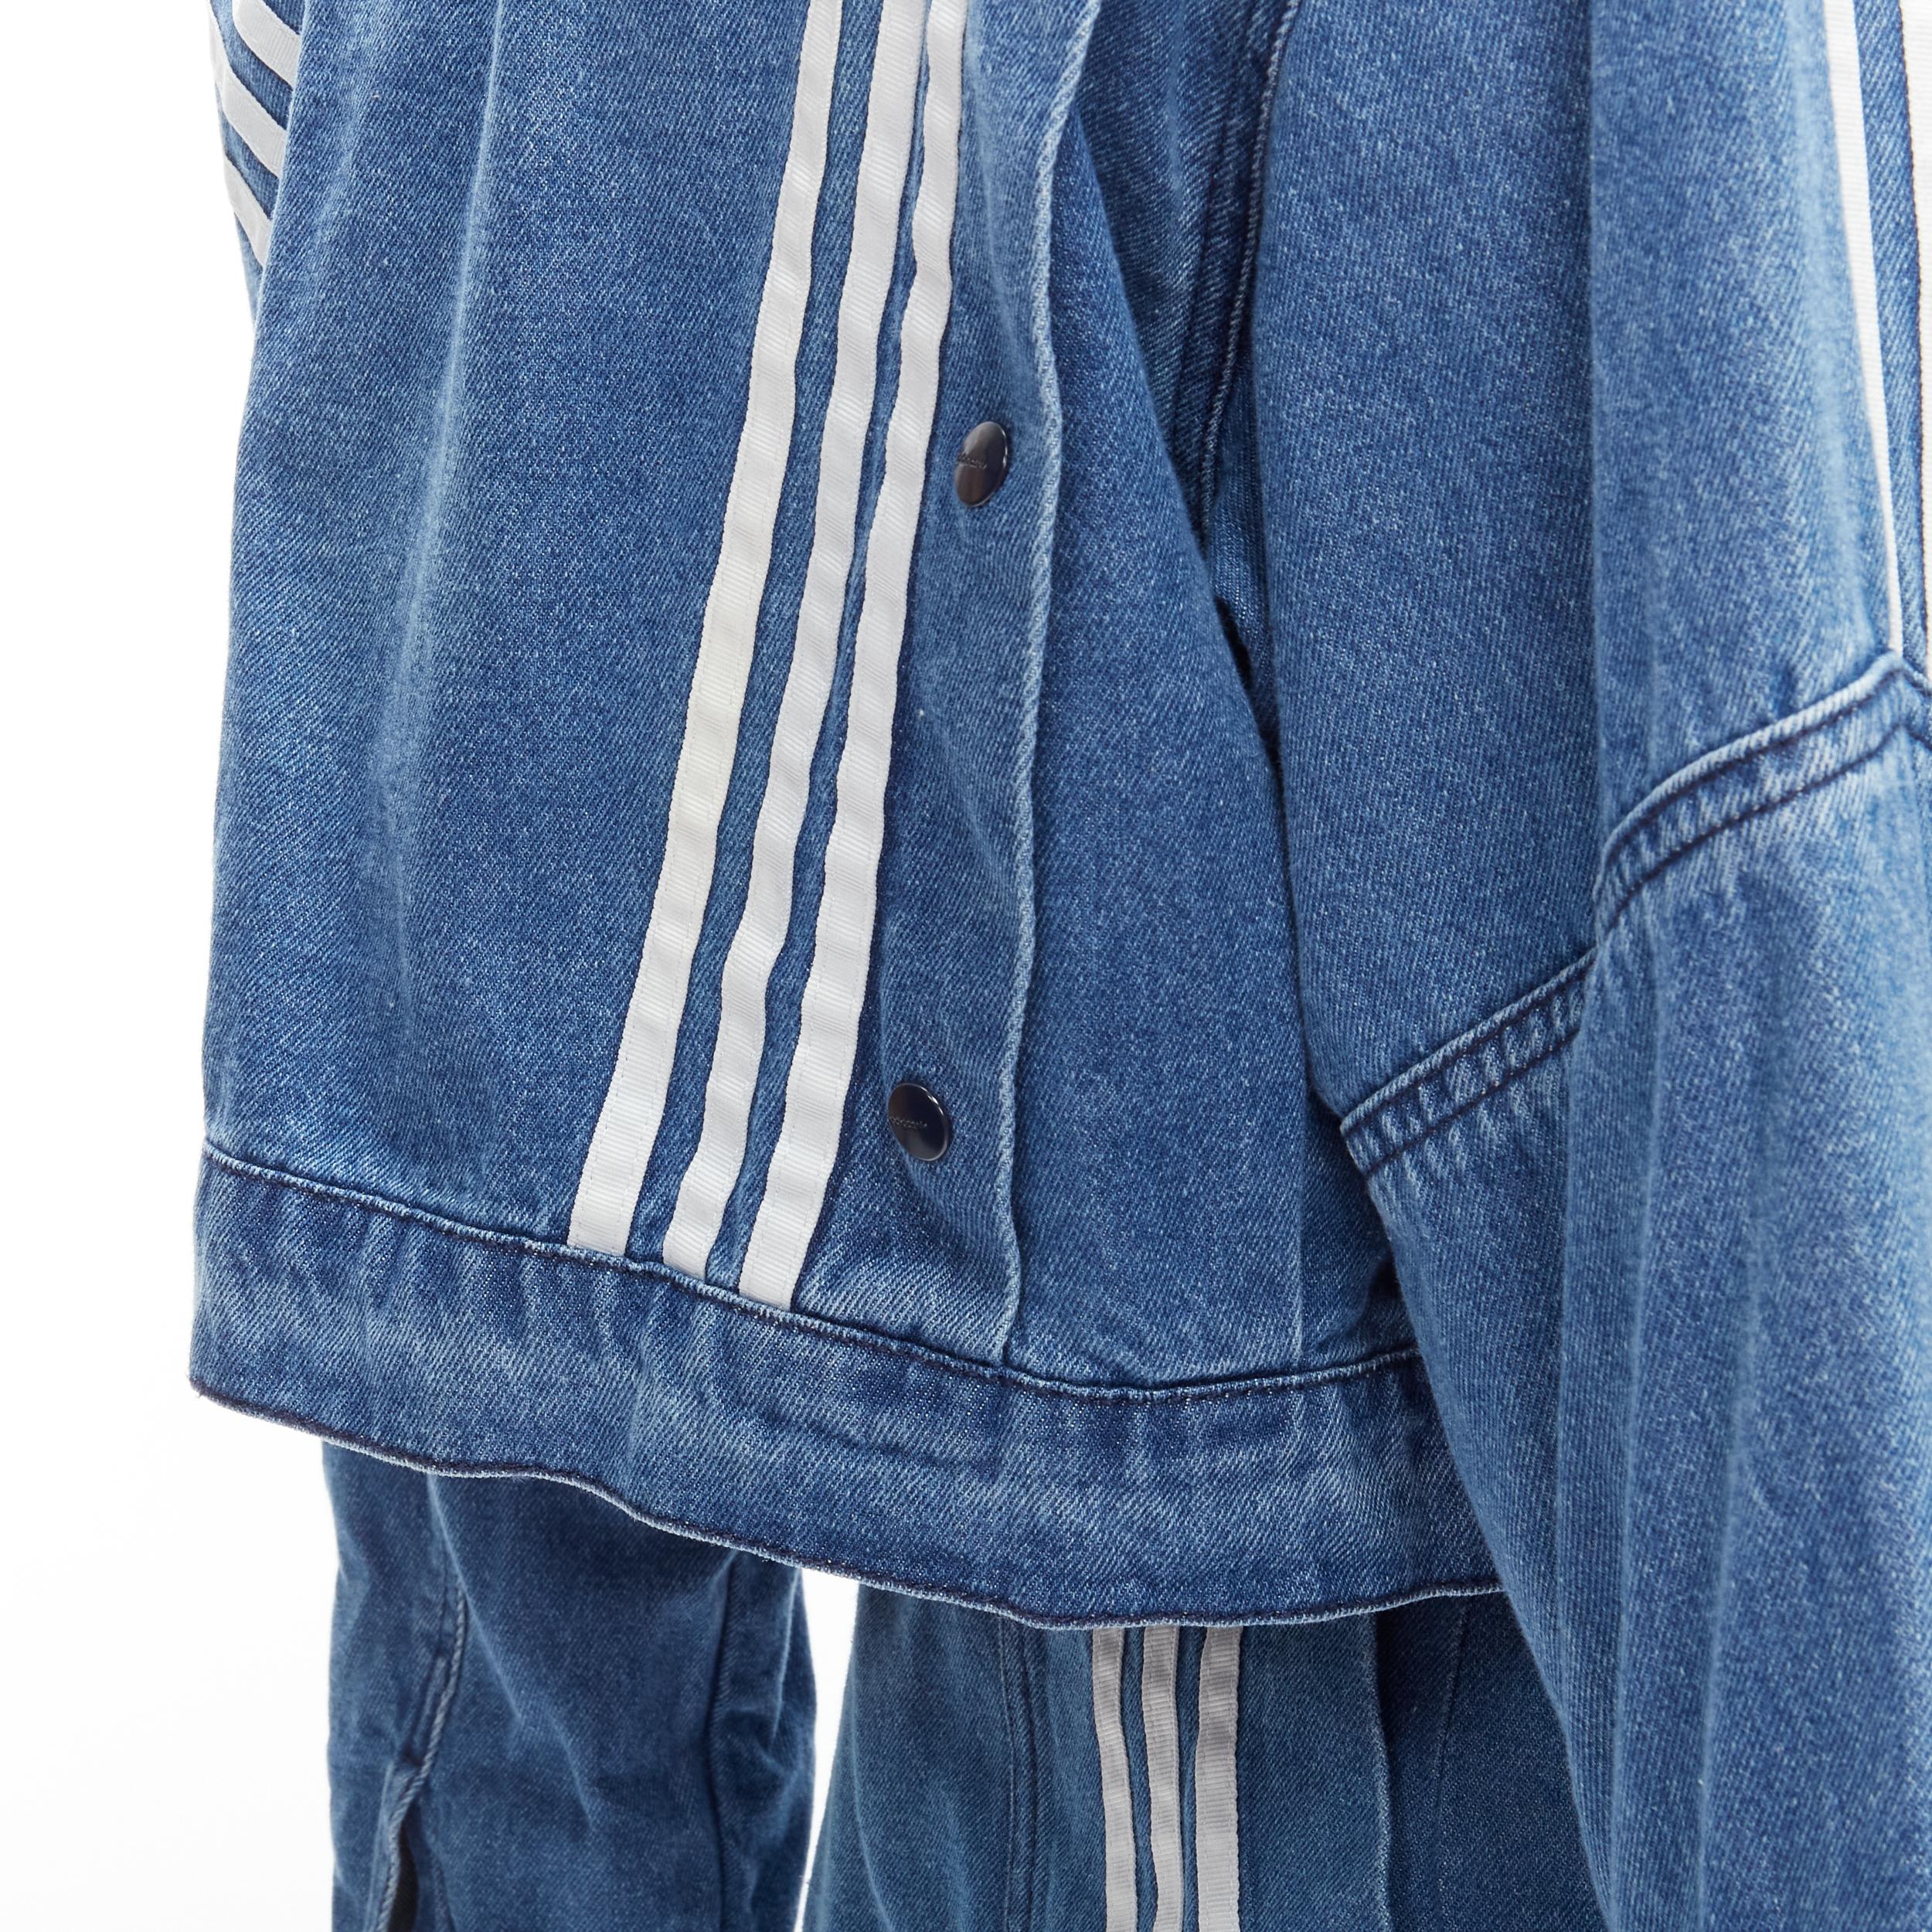 ADIDAS DANIELLE CATHARI blue denim patchwork cropped jacket mini skirt set S 3